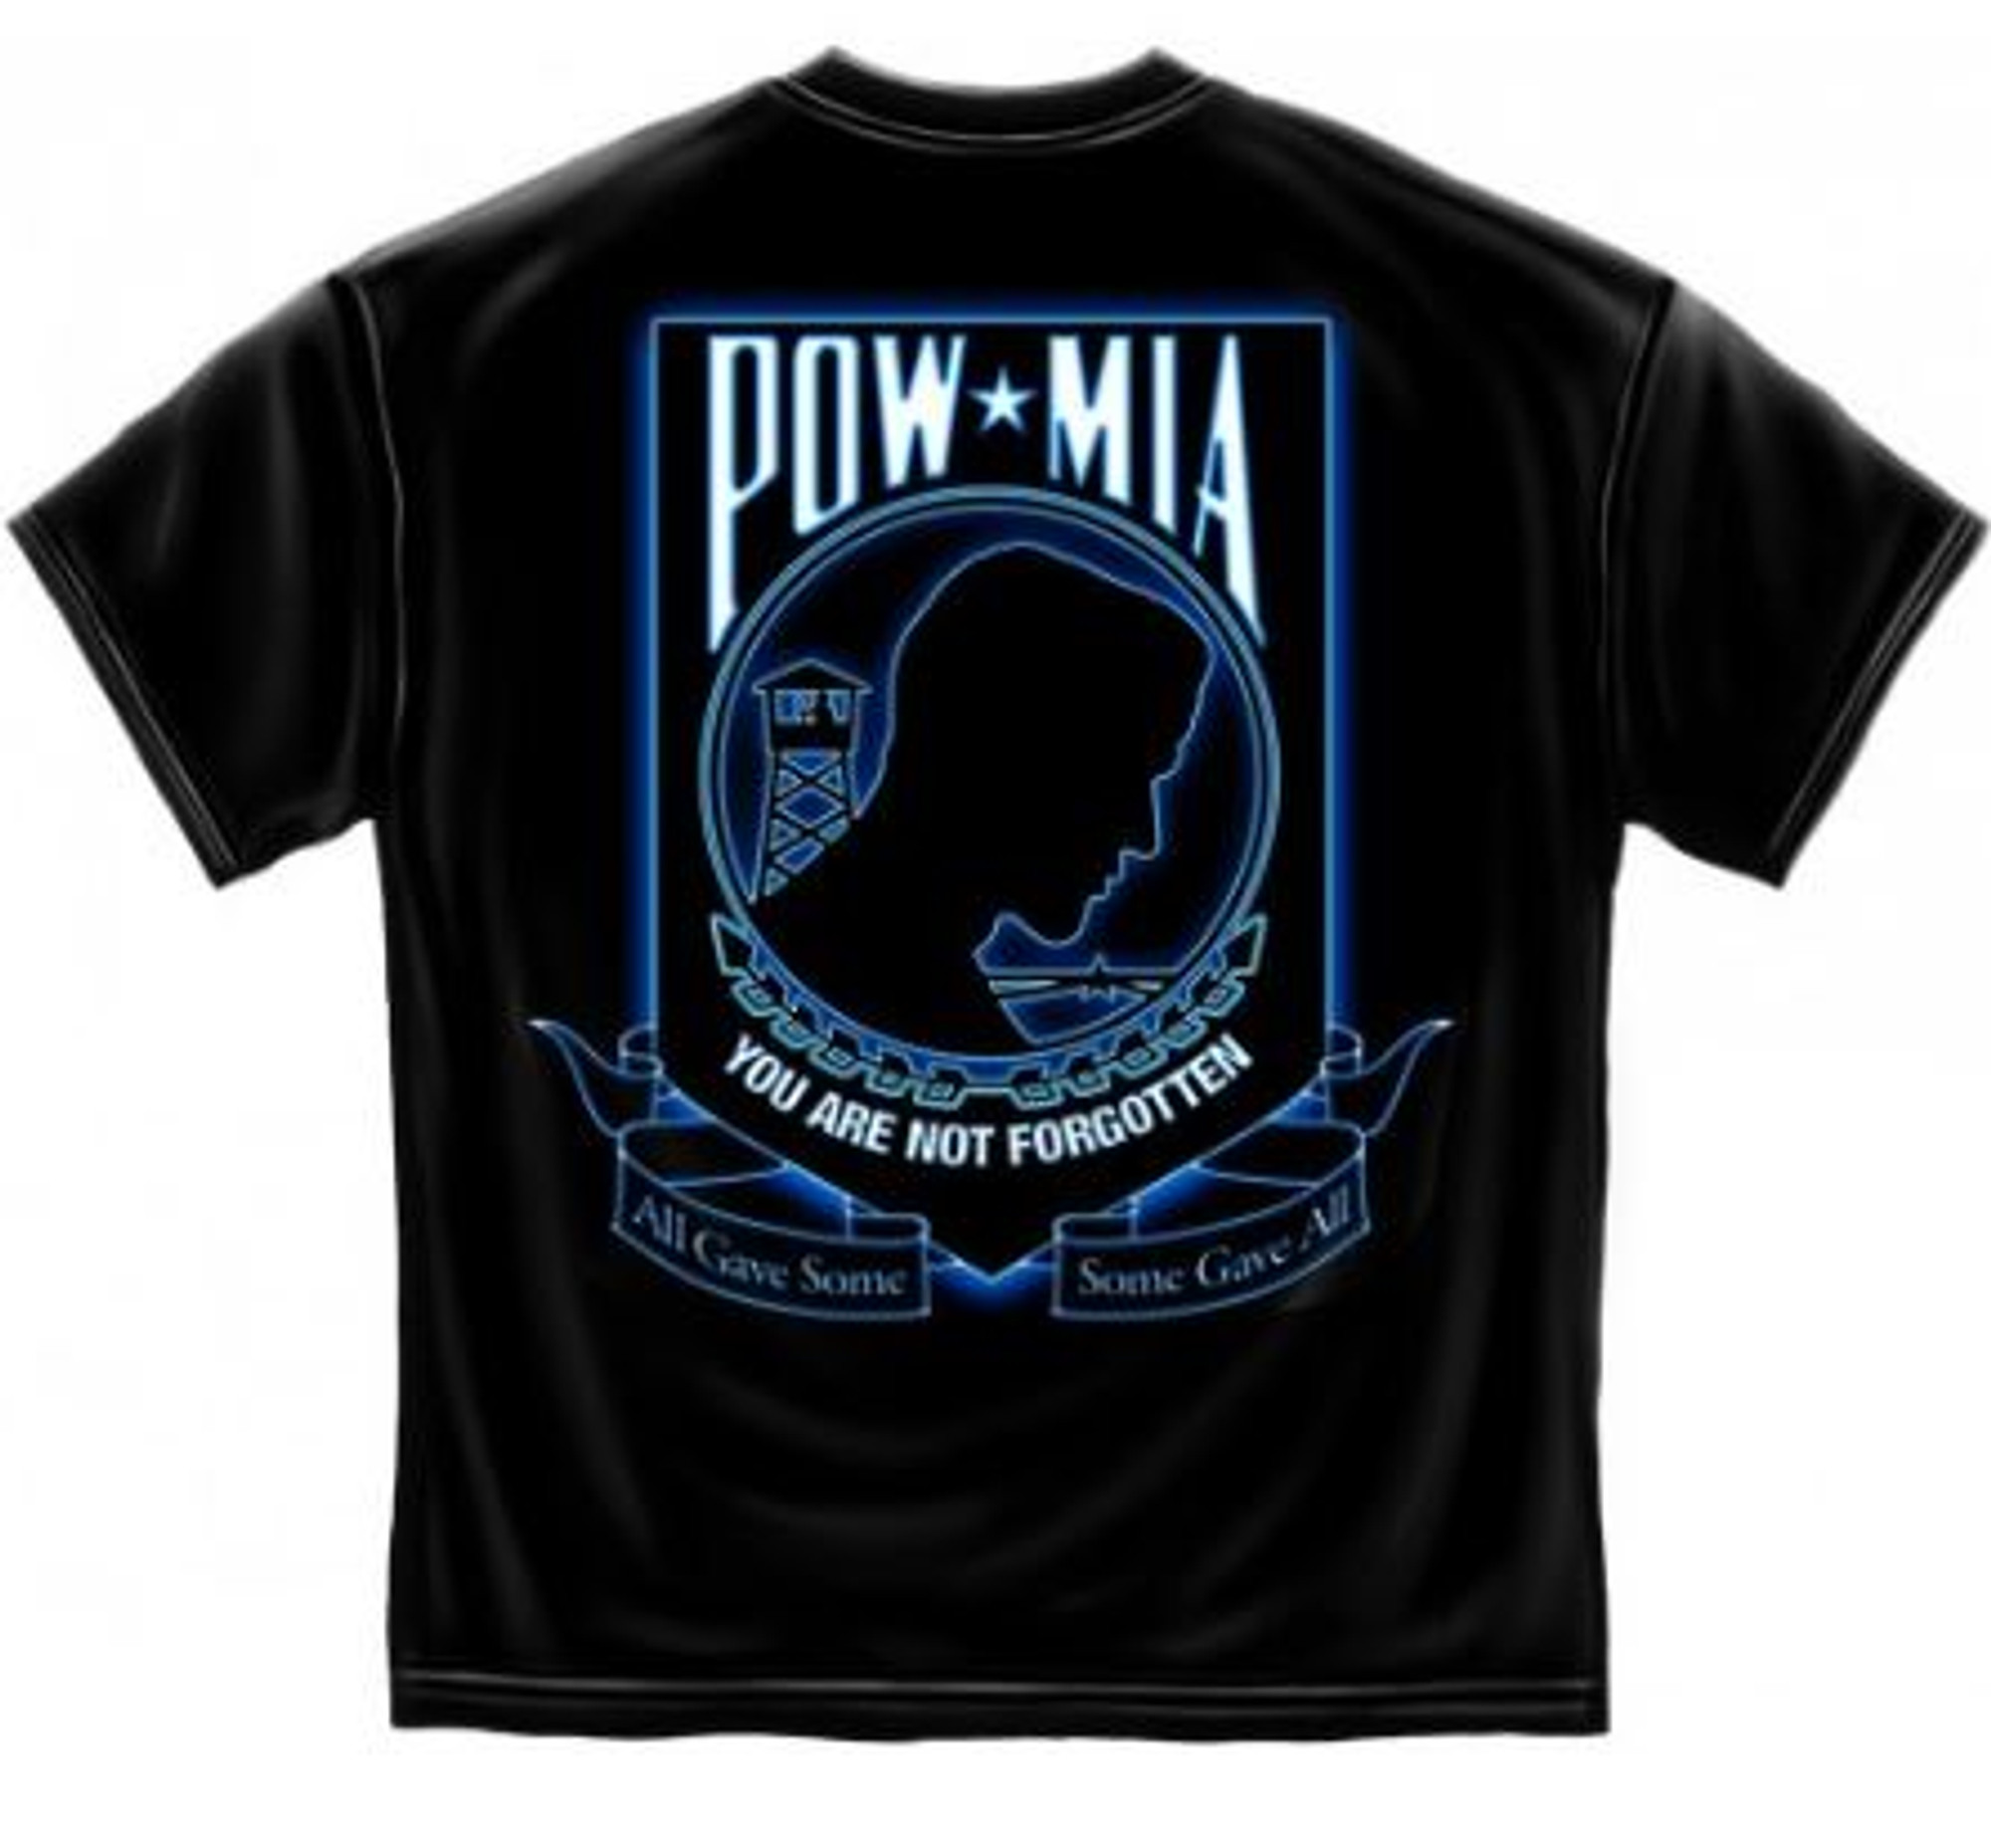 US Veteran "POW-MIA" T-Shirt